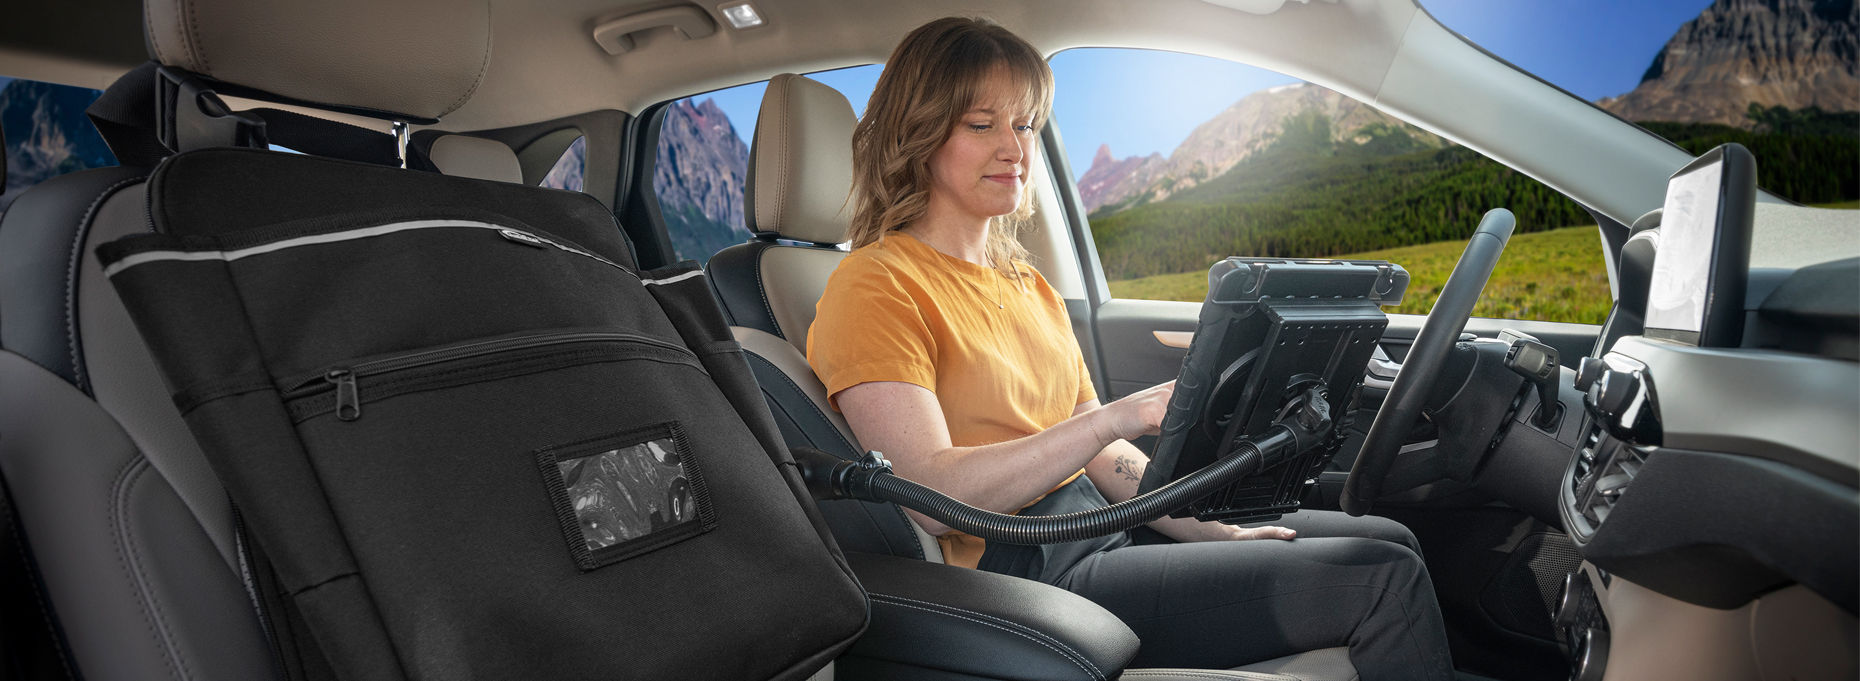 Foam Seat Cushion - AutoExec, Inc.  Providing Solutions for Road Warriors